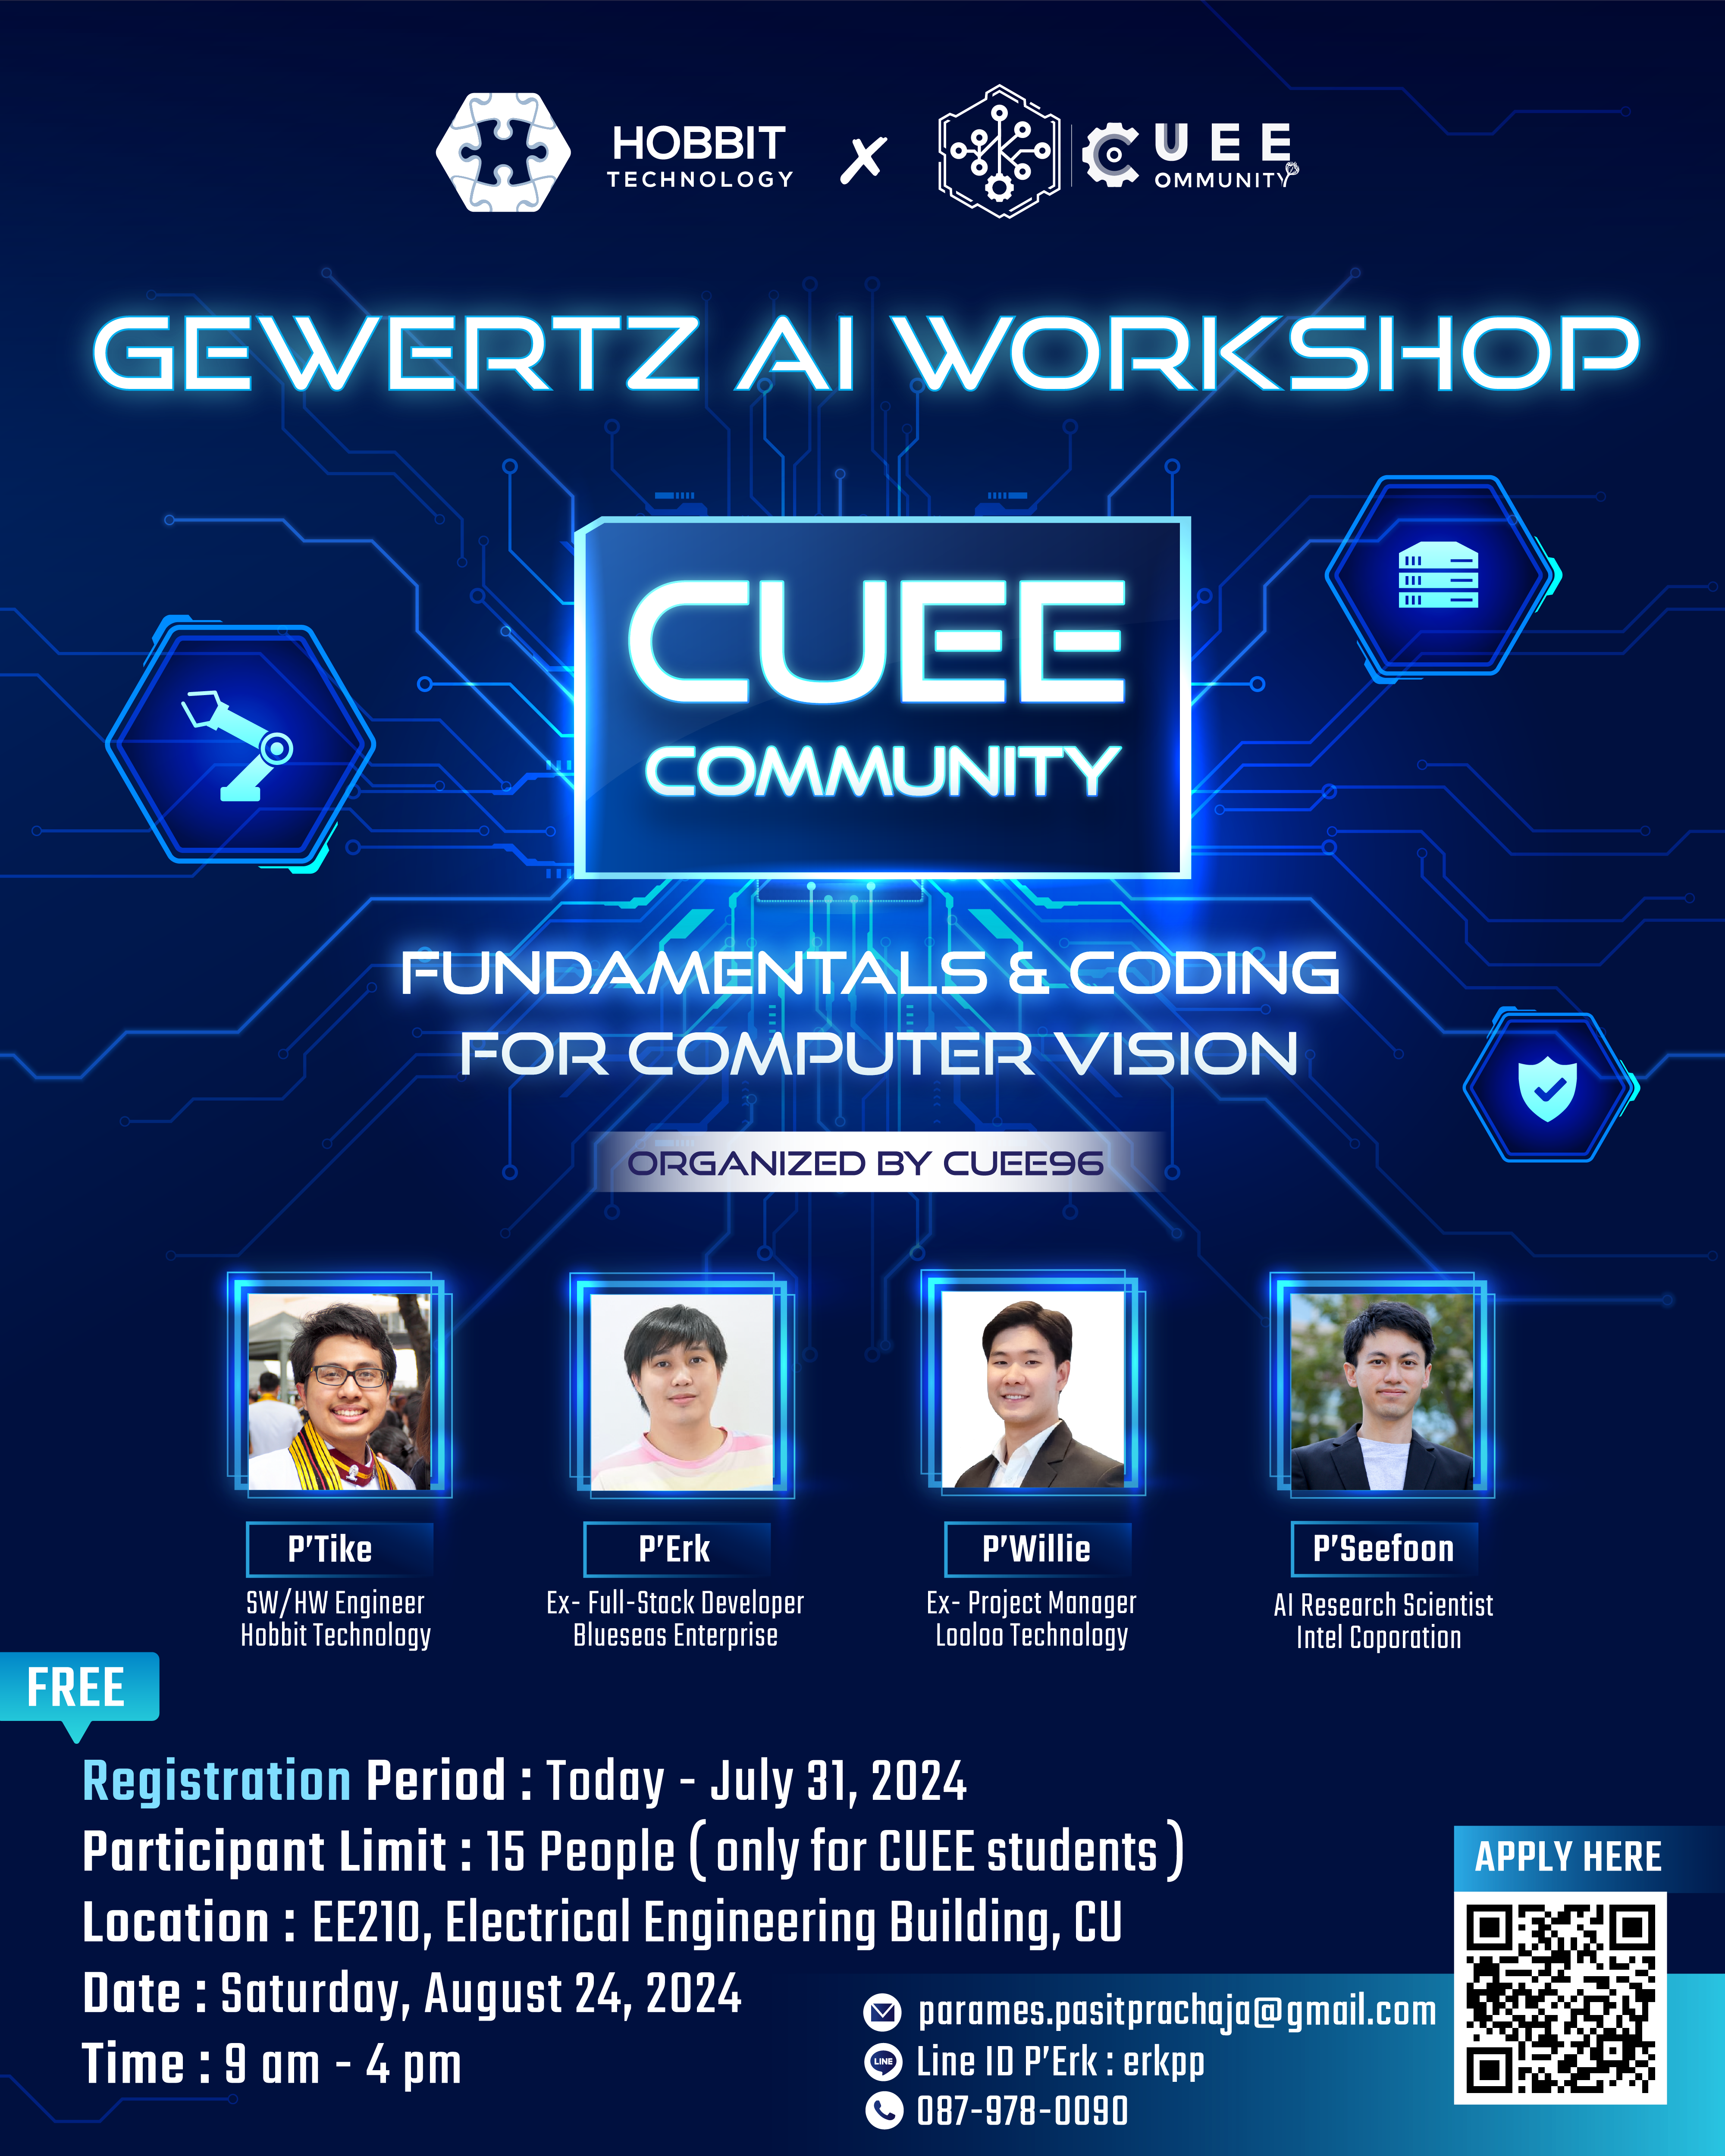 Gewertz AI Workshop Hobbit Technology x CUEE Community หัวข้อ "Fundamentals & Coding for Computer Vision"